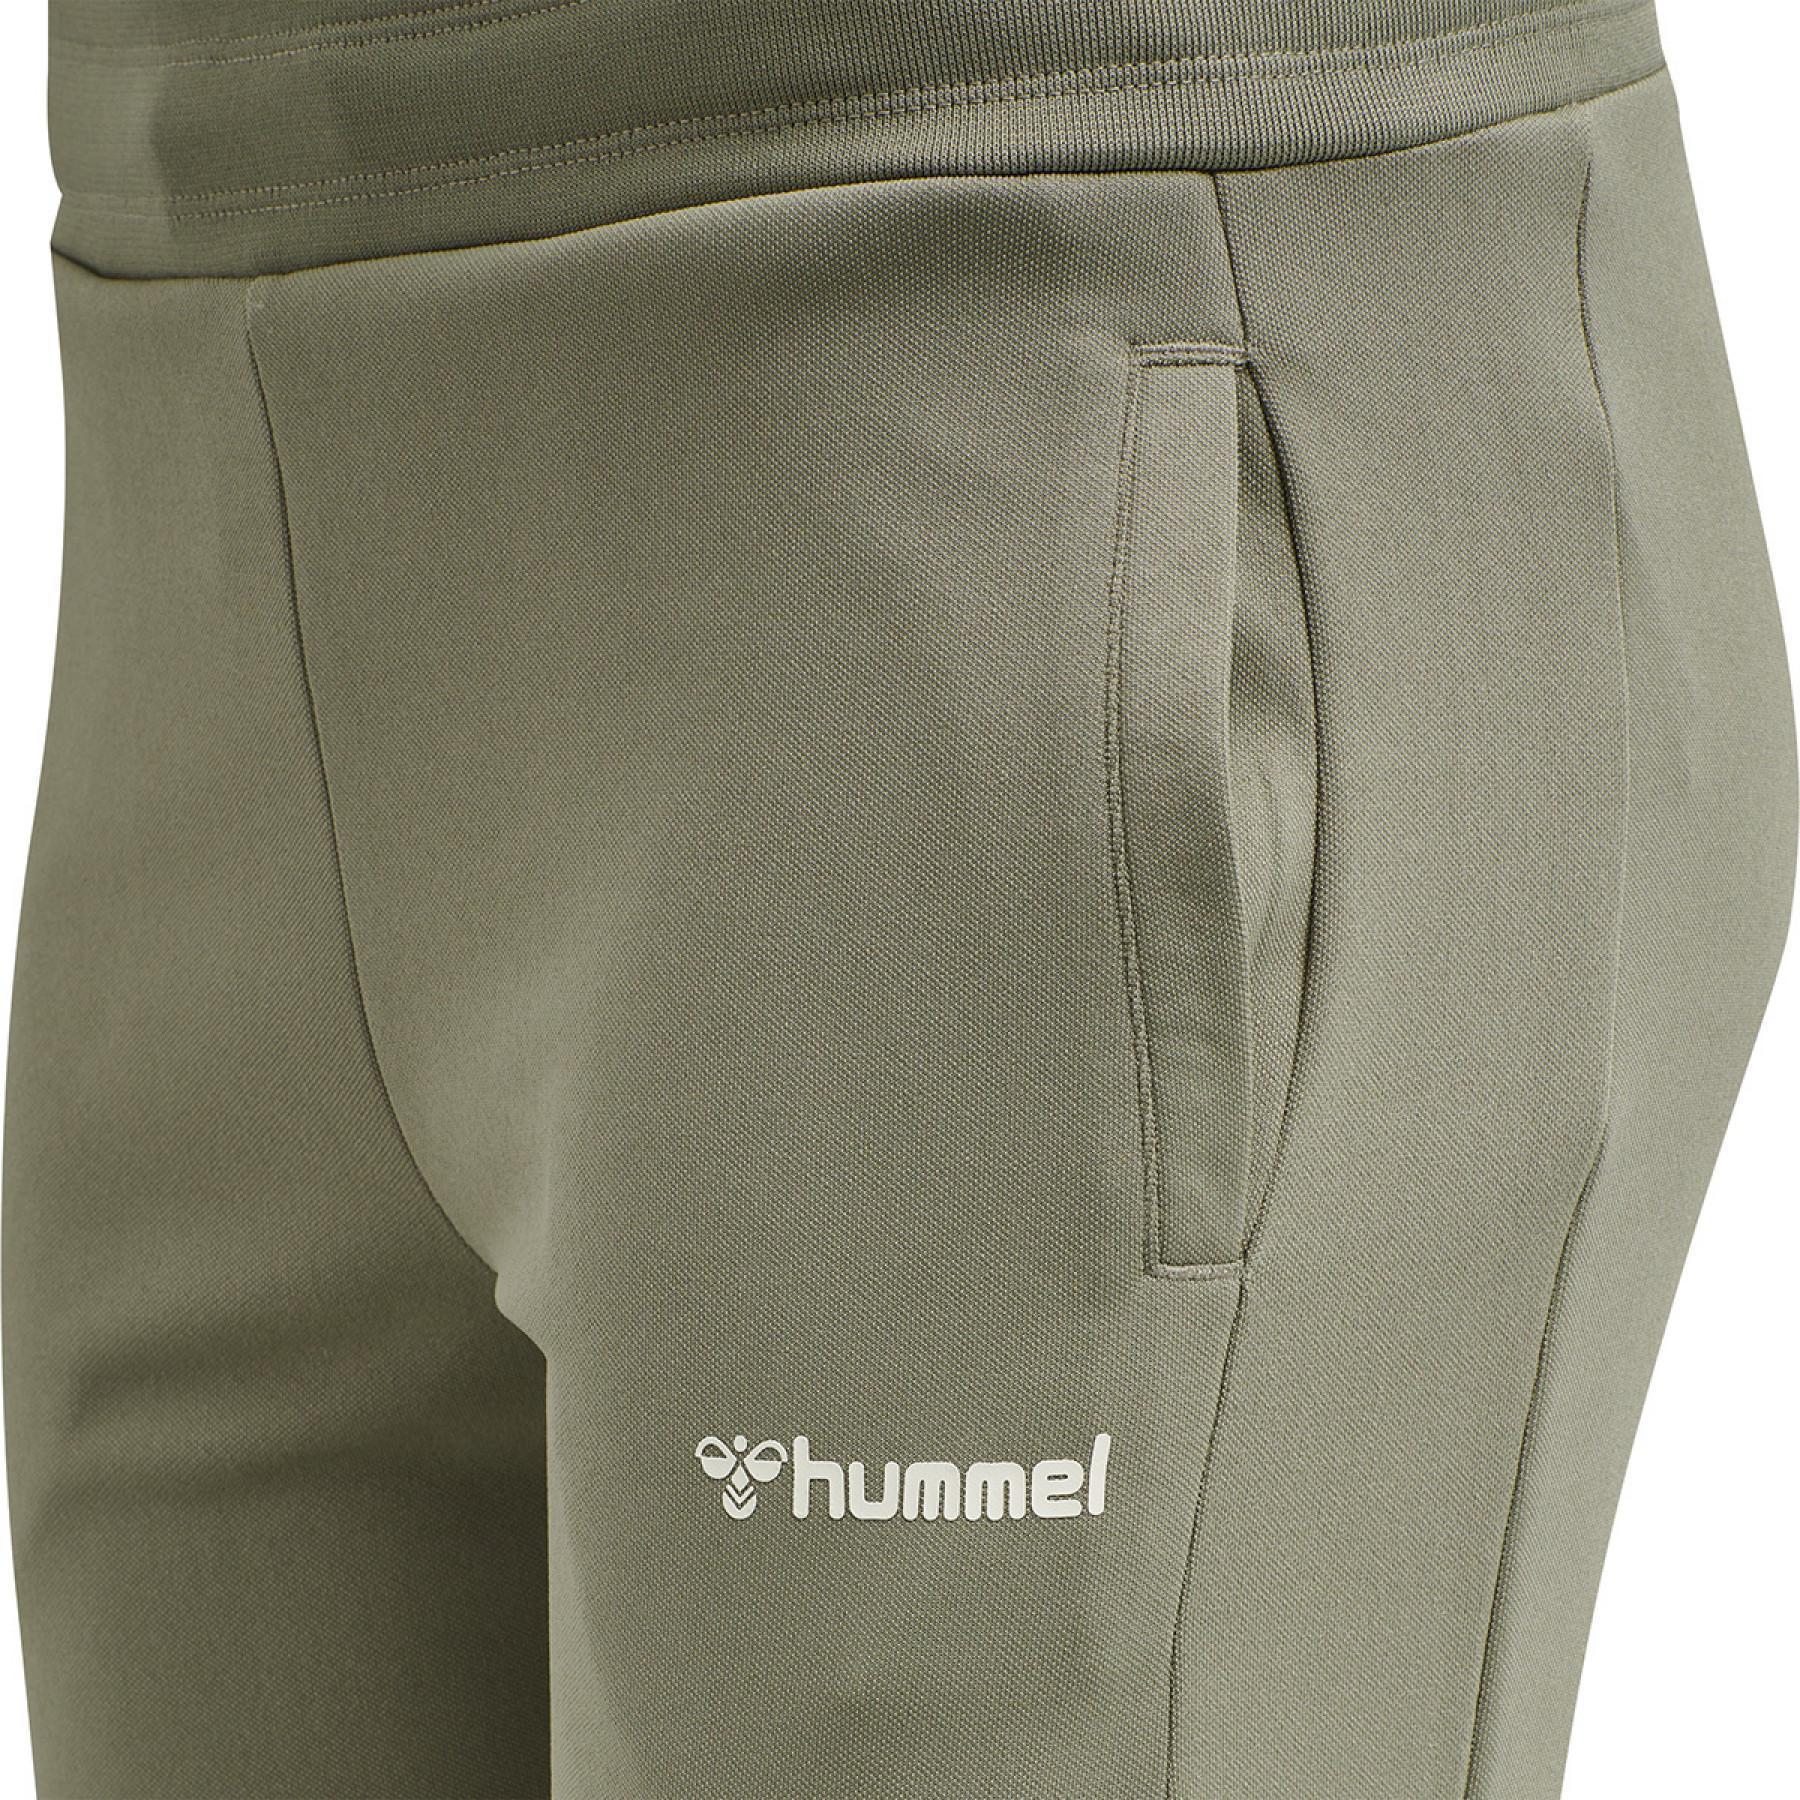 Pantalon femme Hummel hmlramona slim